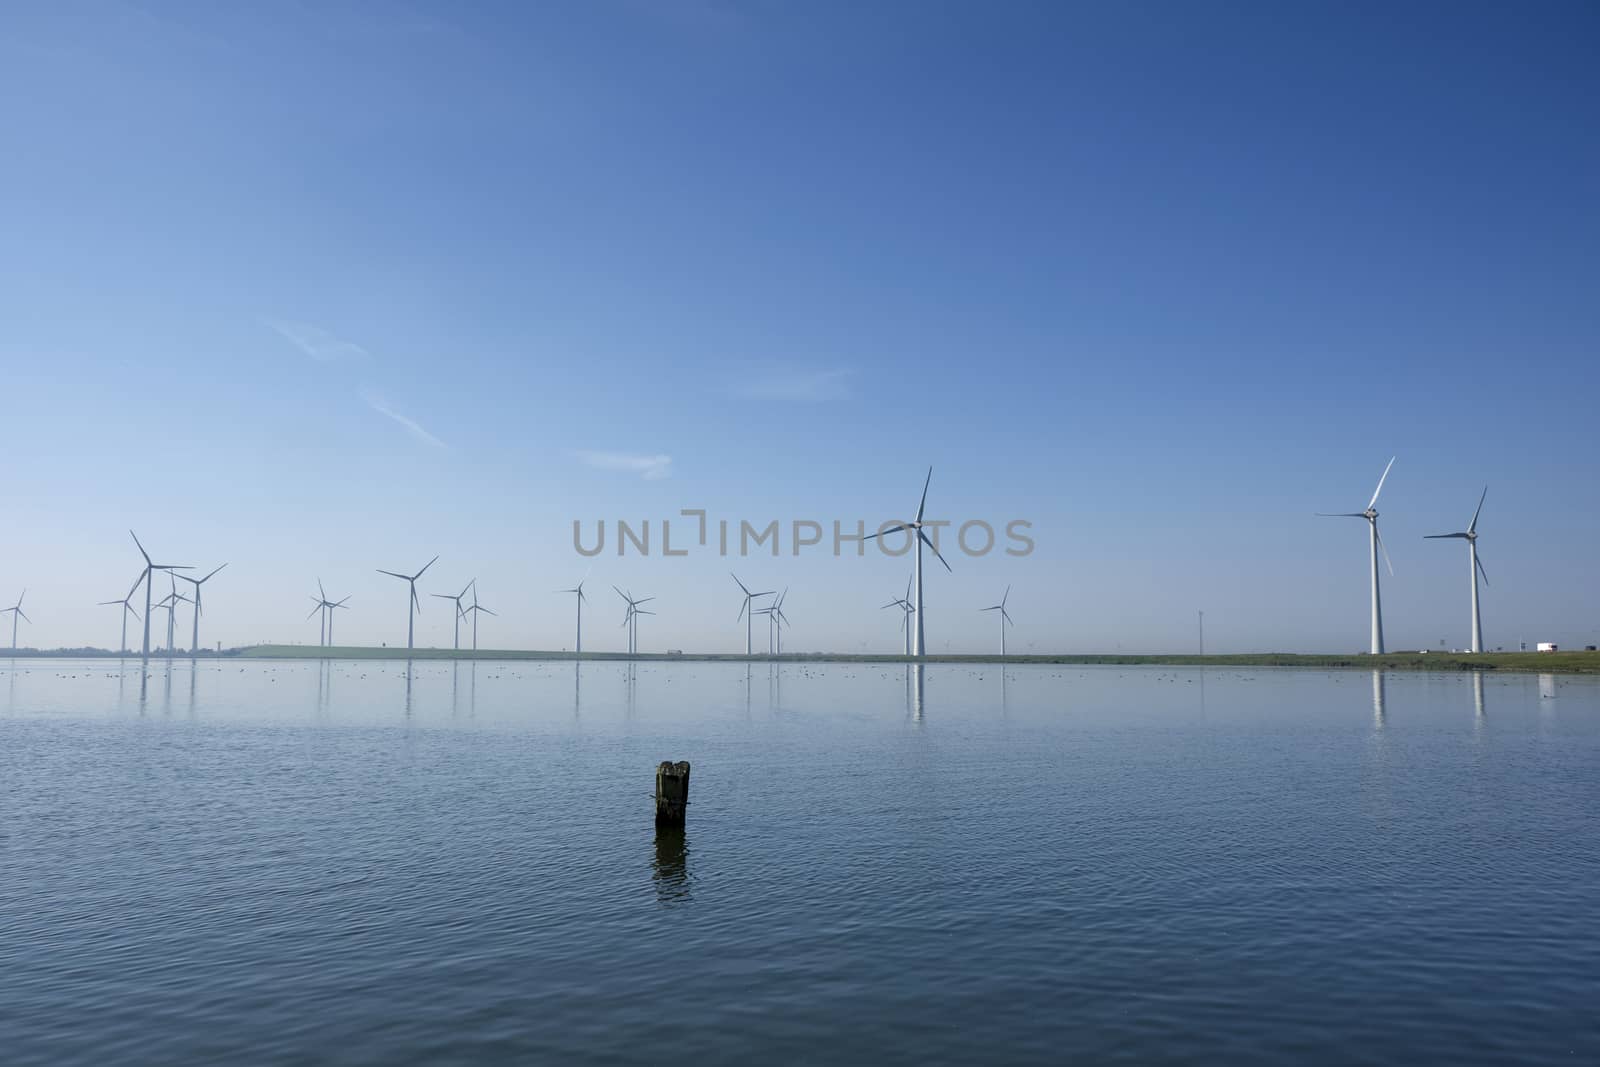 Modern windmills in the water near the shore along a green grassy dike by Tjeerdkruse